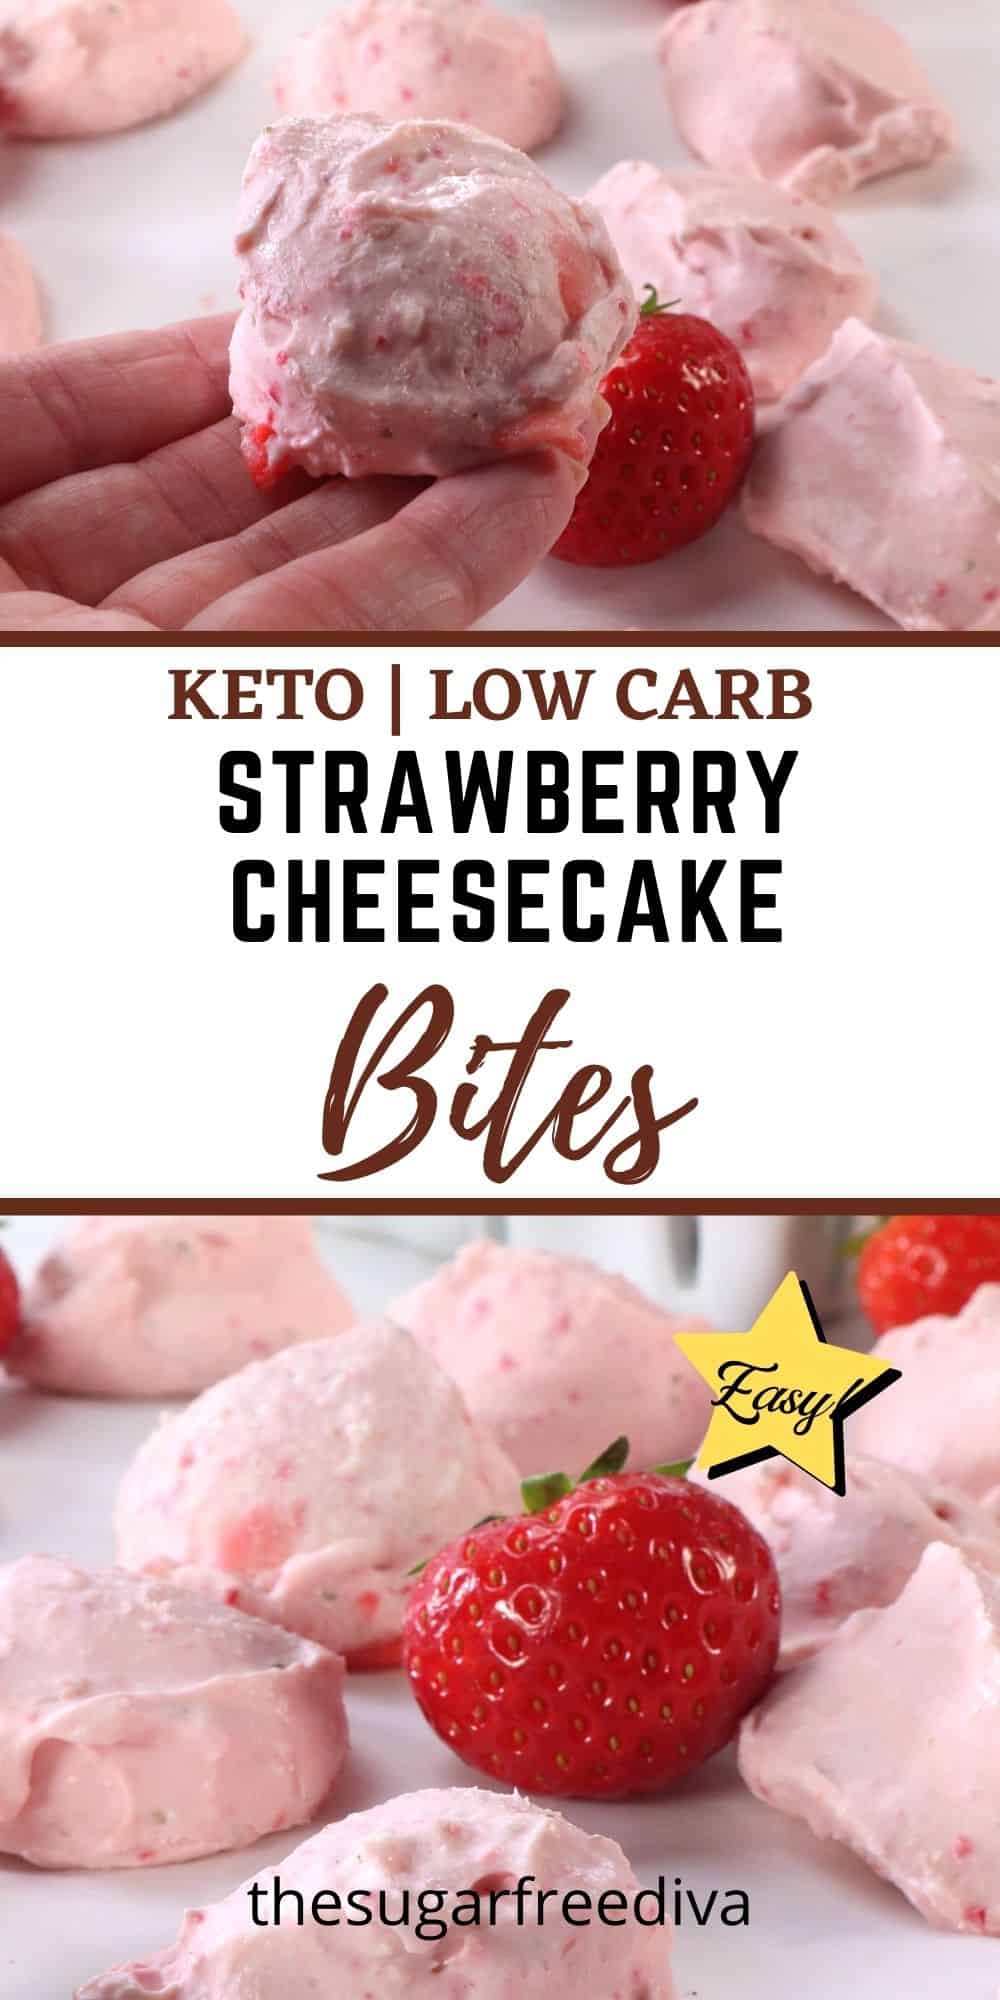  Keto Low Carb Strawberry Cheesecake Bites